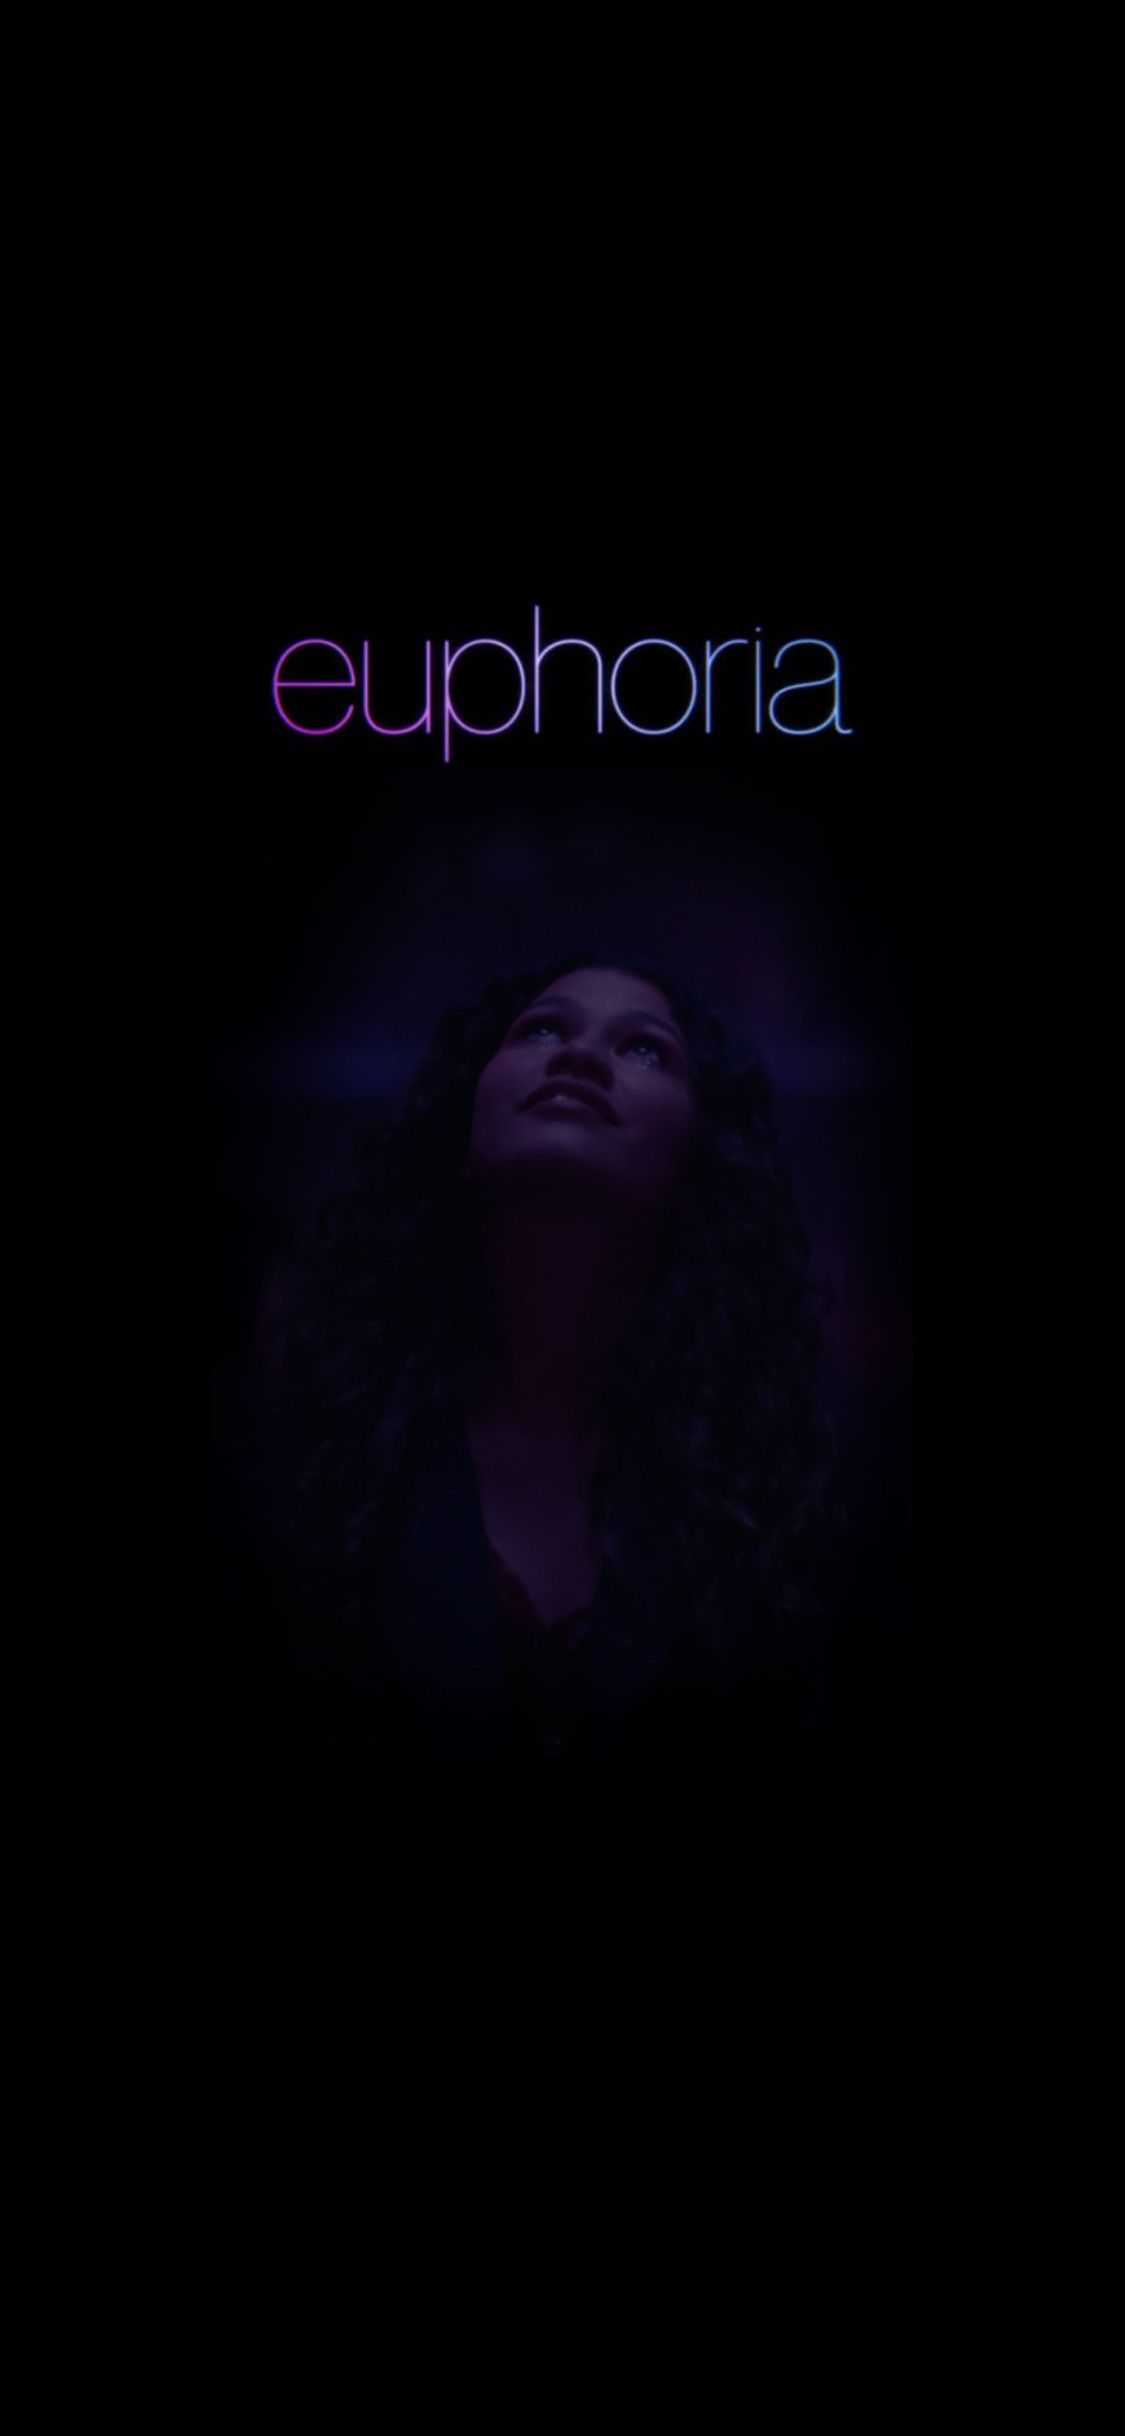 Euphoria Wallpaper iPhone Free HD Wallpaper